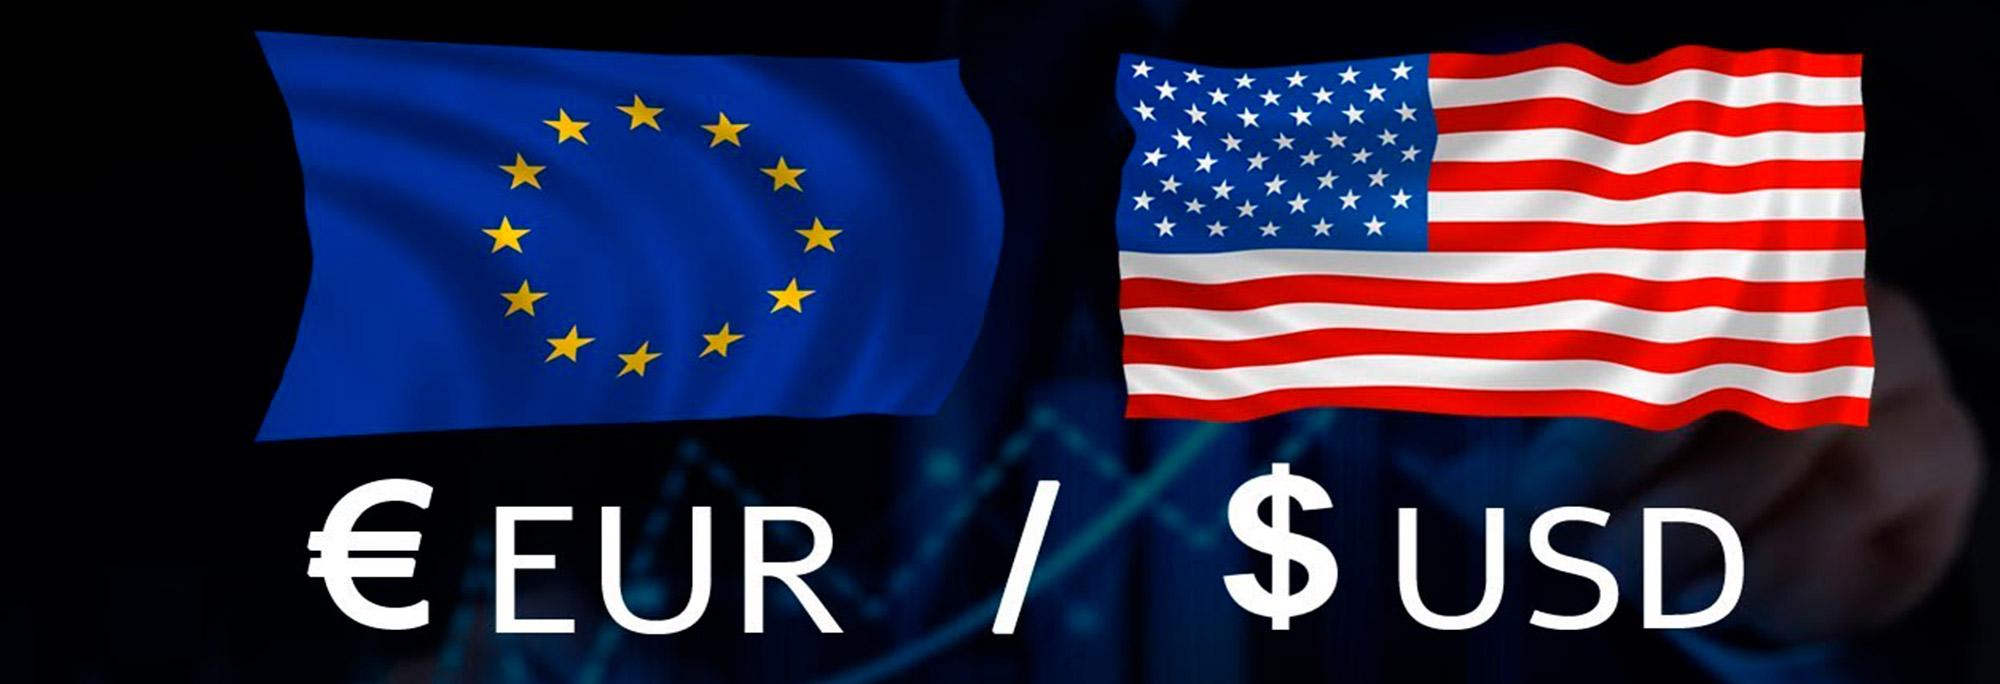 валютная пара EUR/USD фотоф